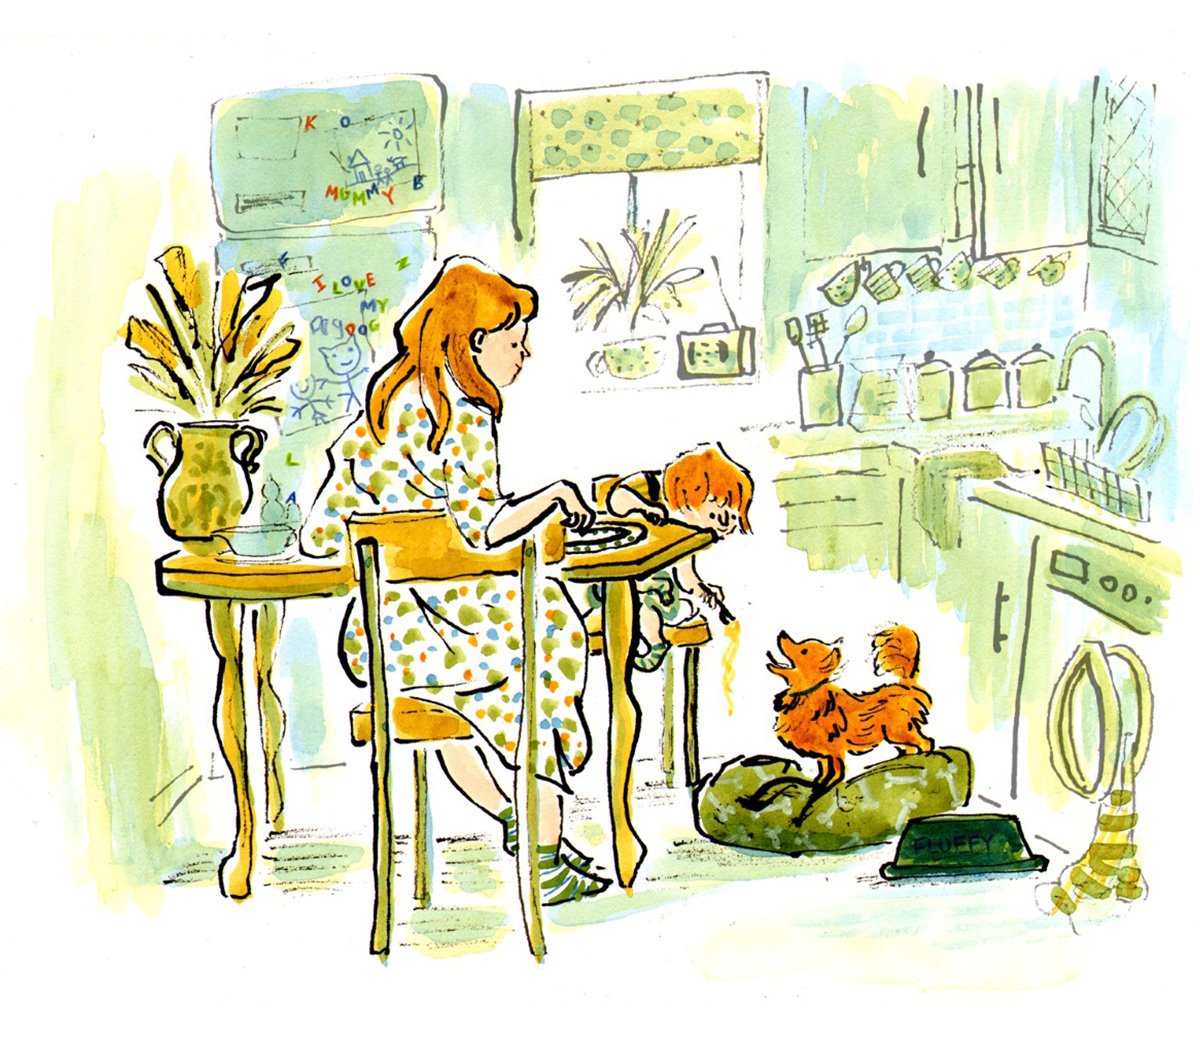 emma-chinnery-kitchen-scene-illustration.jpg